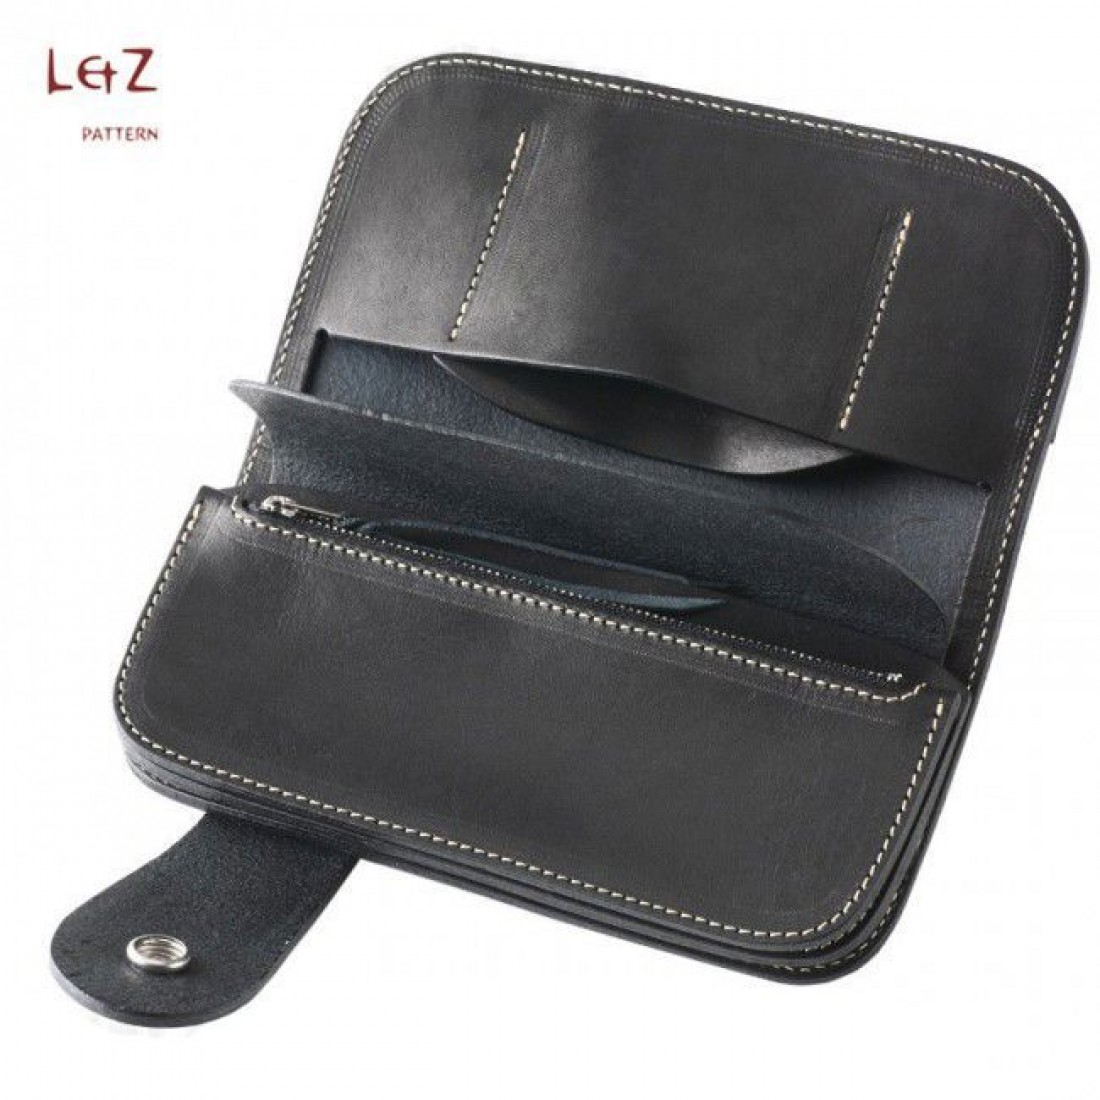 bag sewing patterns long wallet patterns PDF CCD-09 LZpattern design ...